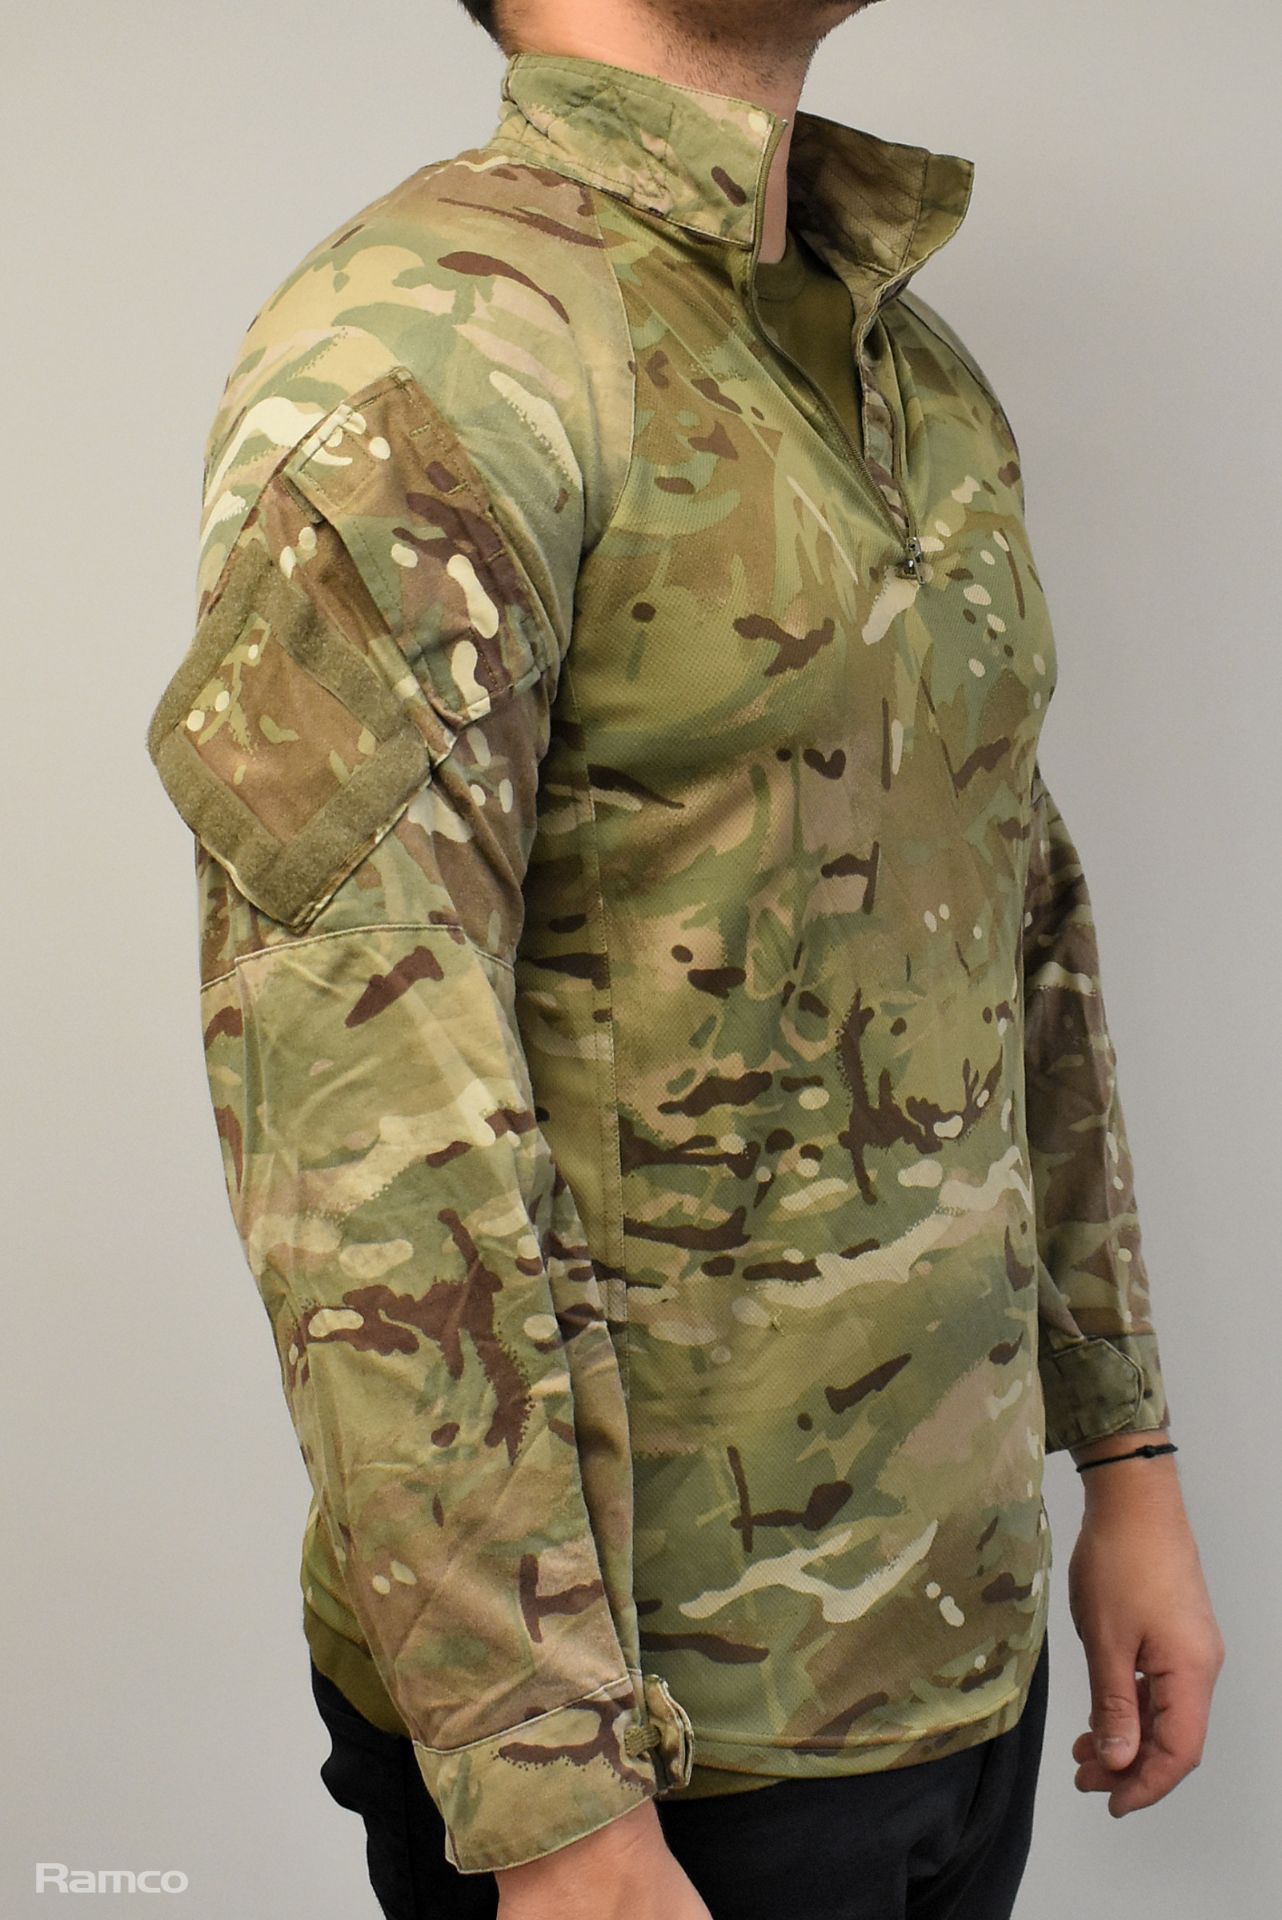 50x British Army MTP UBAC's shirts - mixed types - mixed grades and sizes - Image 4 of 9